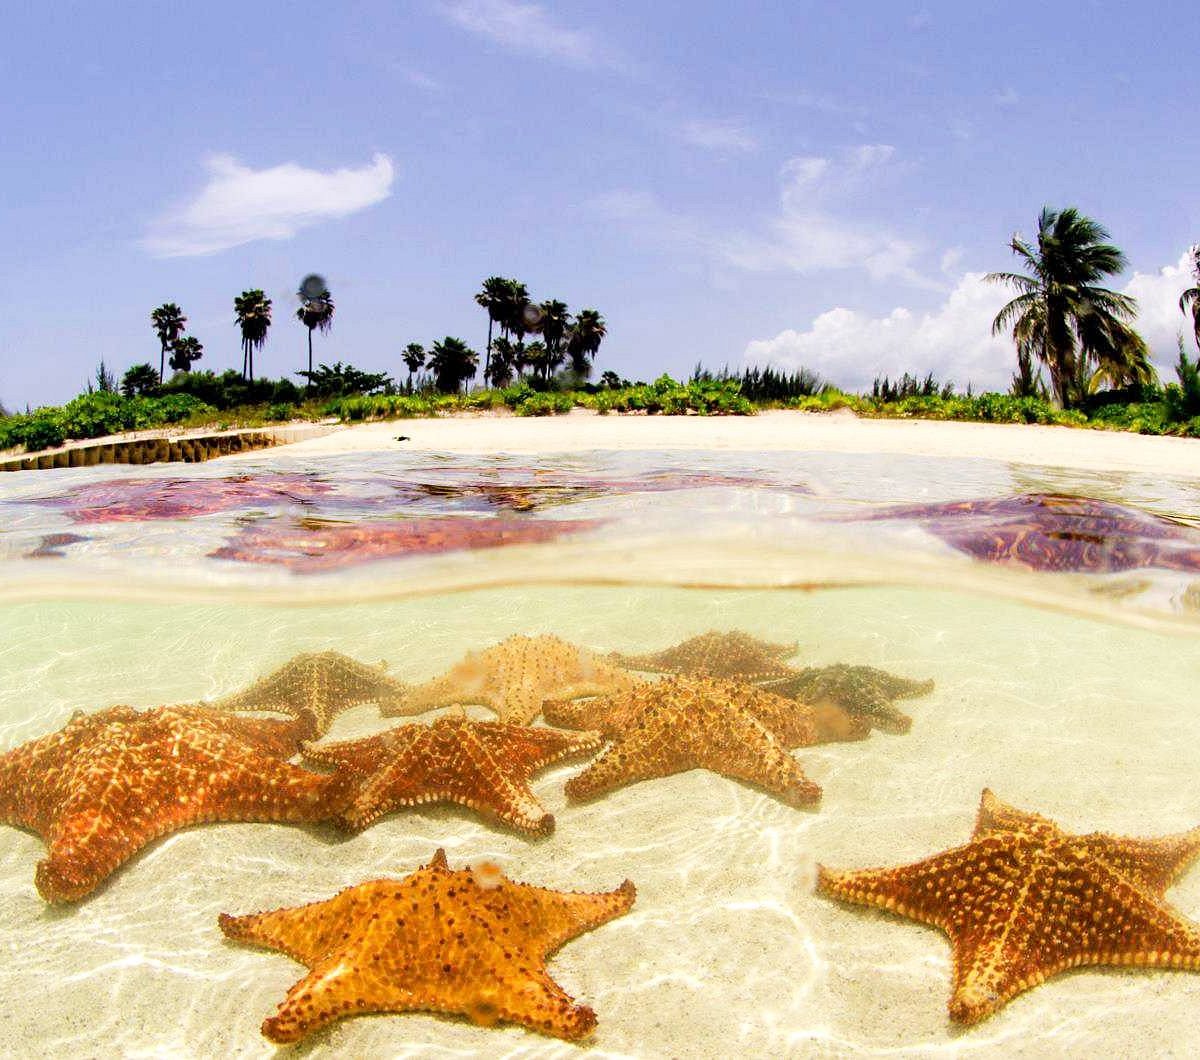 Giant starfish on Texas beach: Woman sees big sea star at Port Aransas